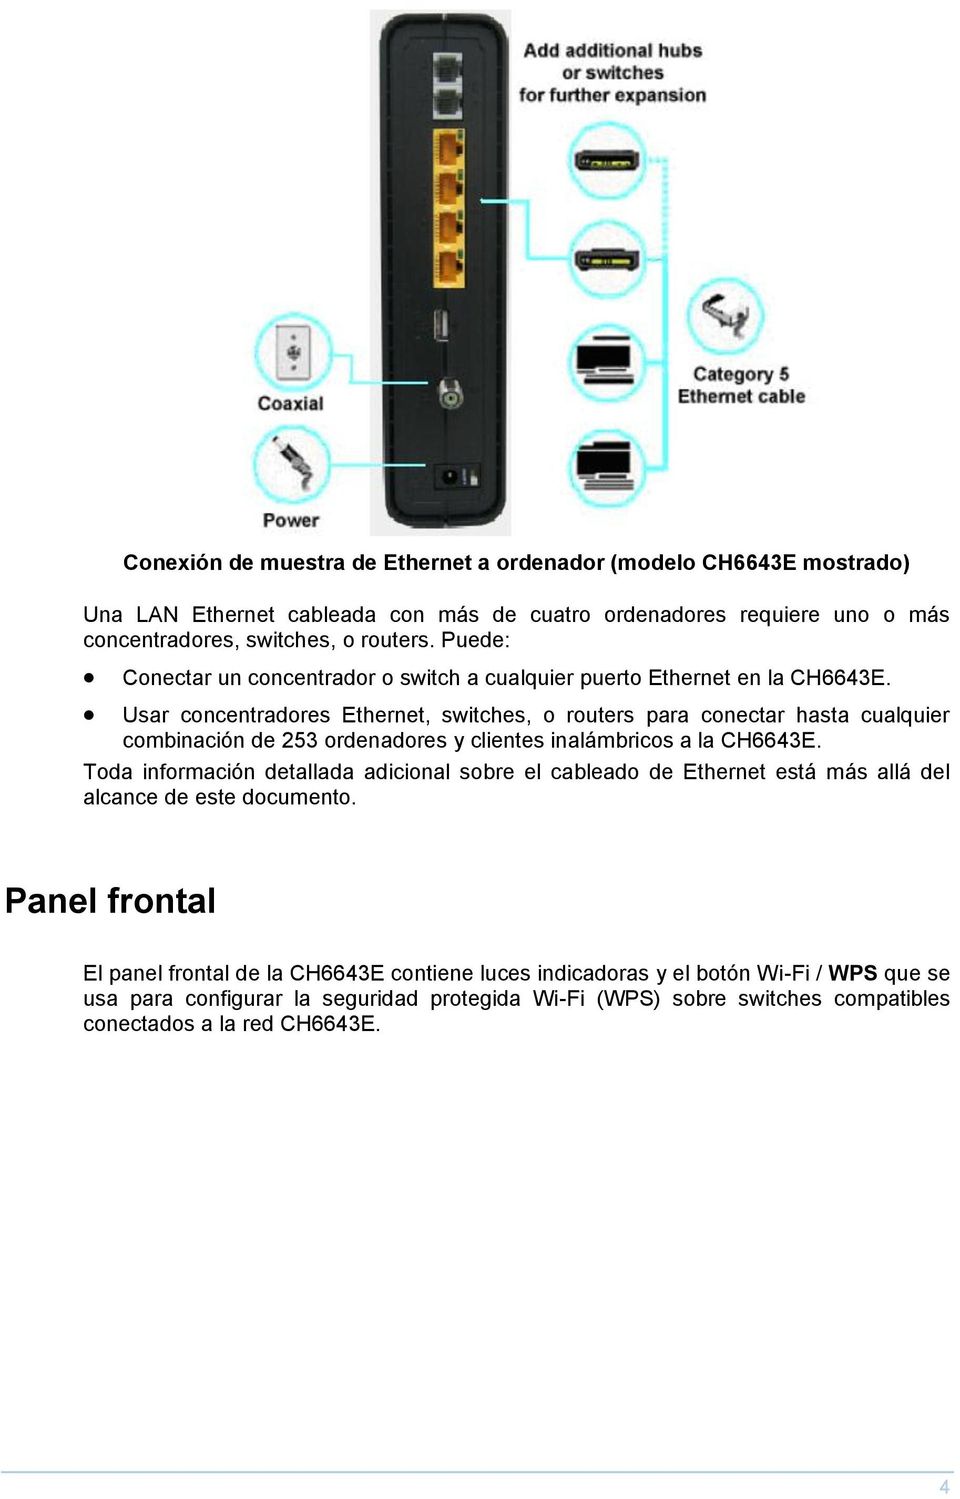 Usar concentradores Ethernet, switches, o routers para conectar hasta cualquier combinación de 253 ordenadores y clientes inalámbricos a la CH6643E.